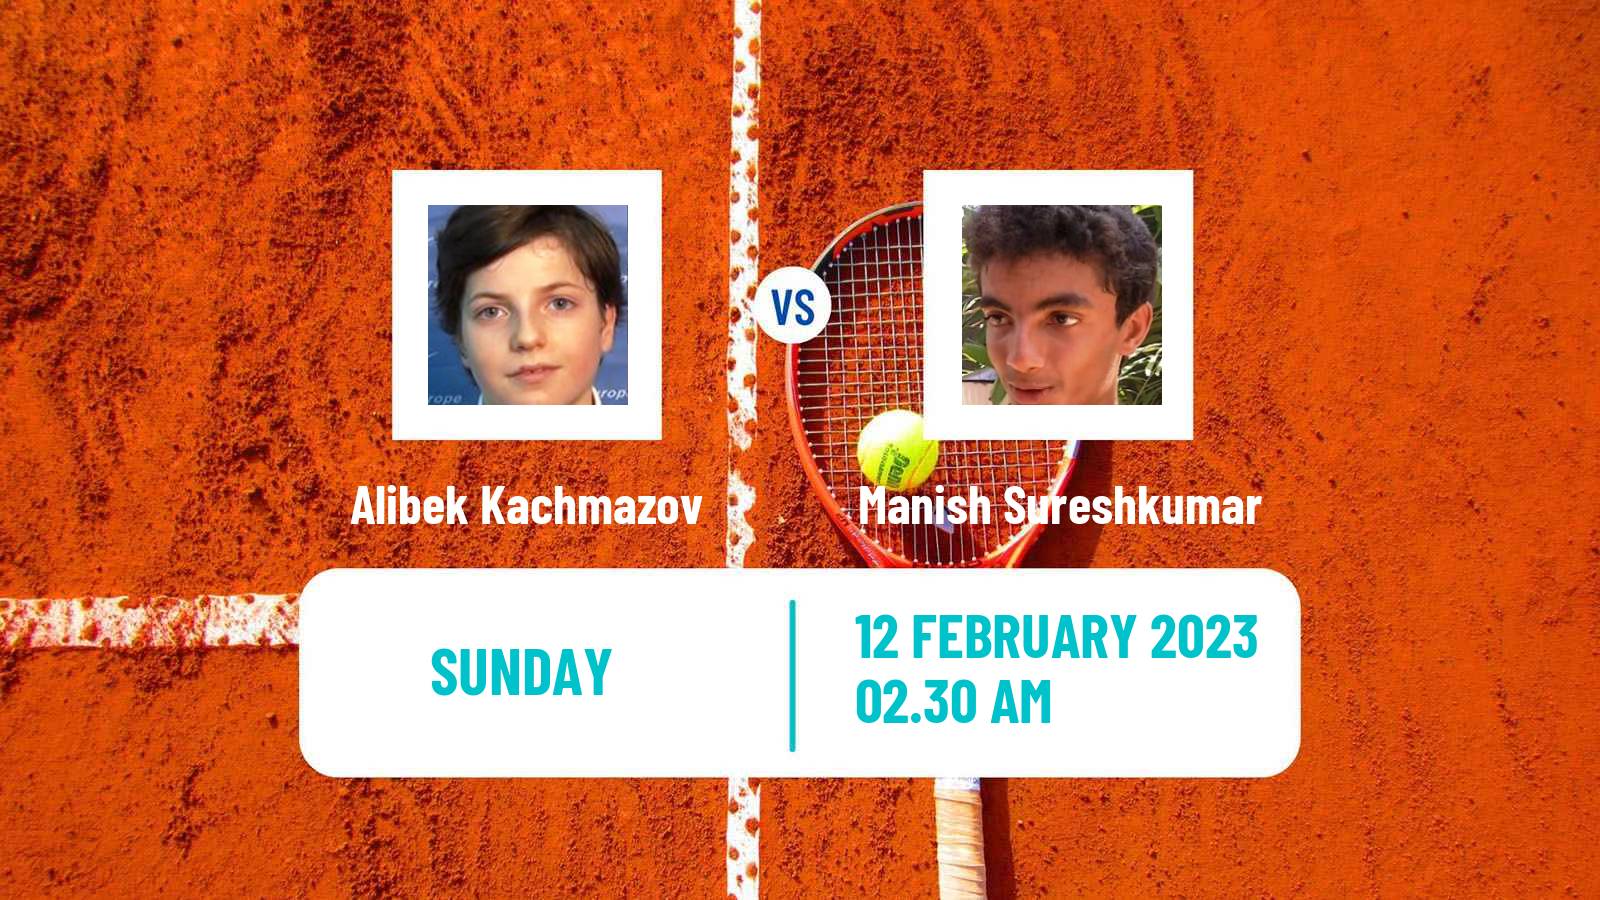 Tennis ATP Challenger Alibek Kachmazov - Manish Sureshkumar